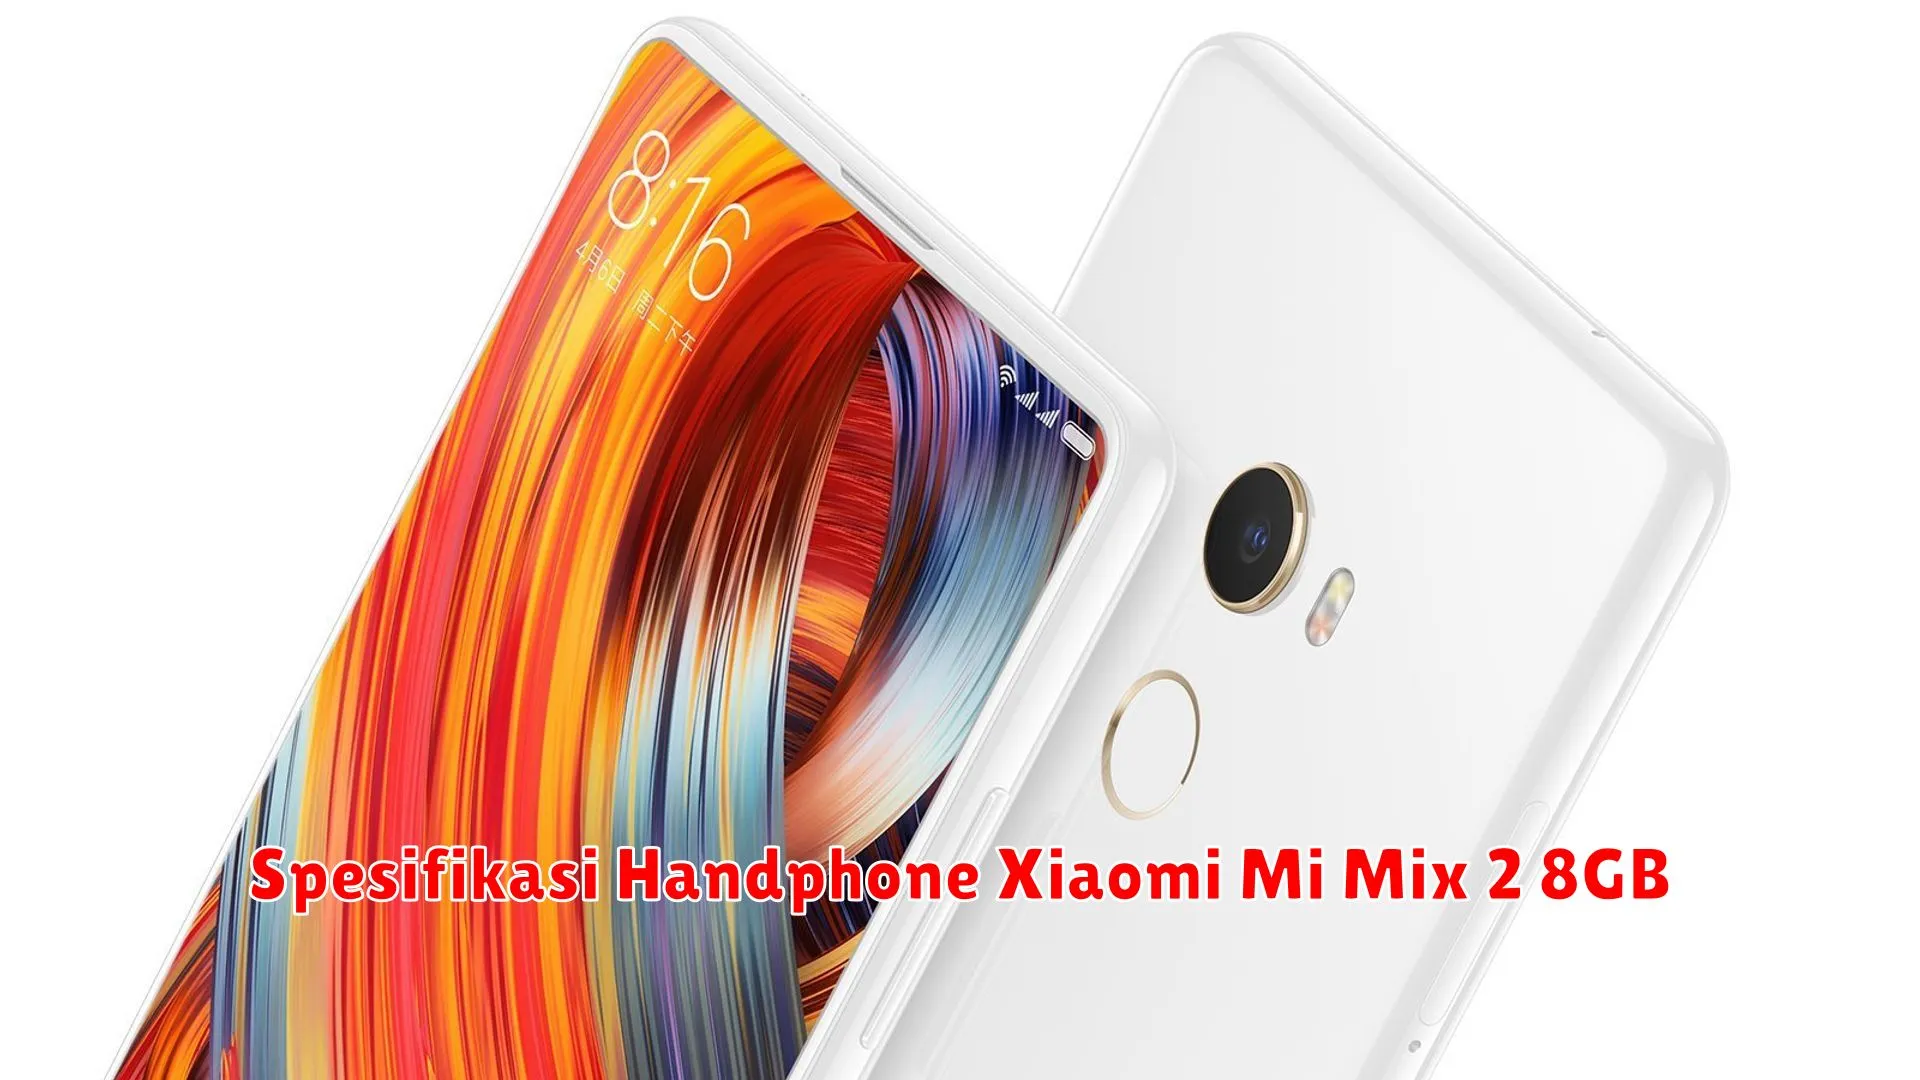 Spesifikasi Handphone Xiaomi Mi Mix 2 8GB